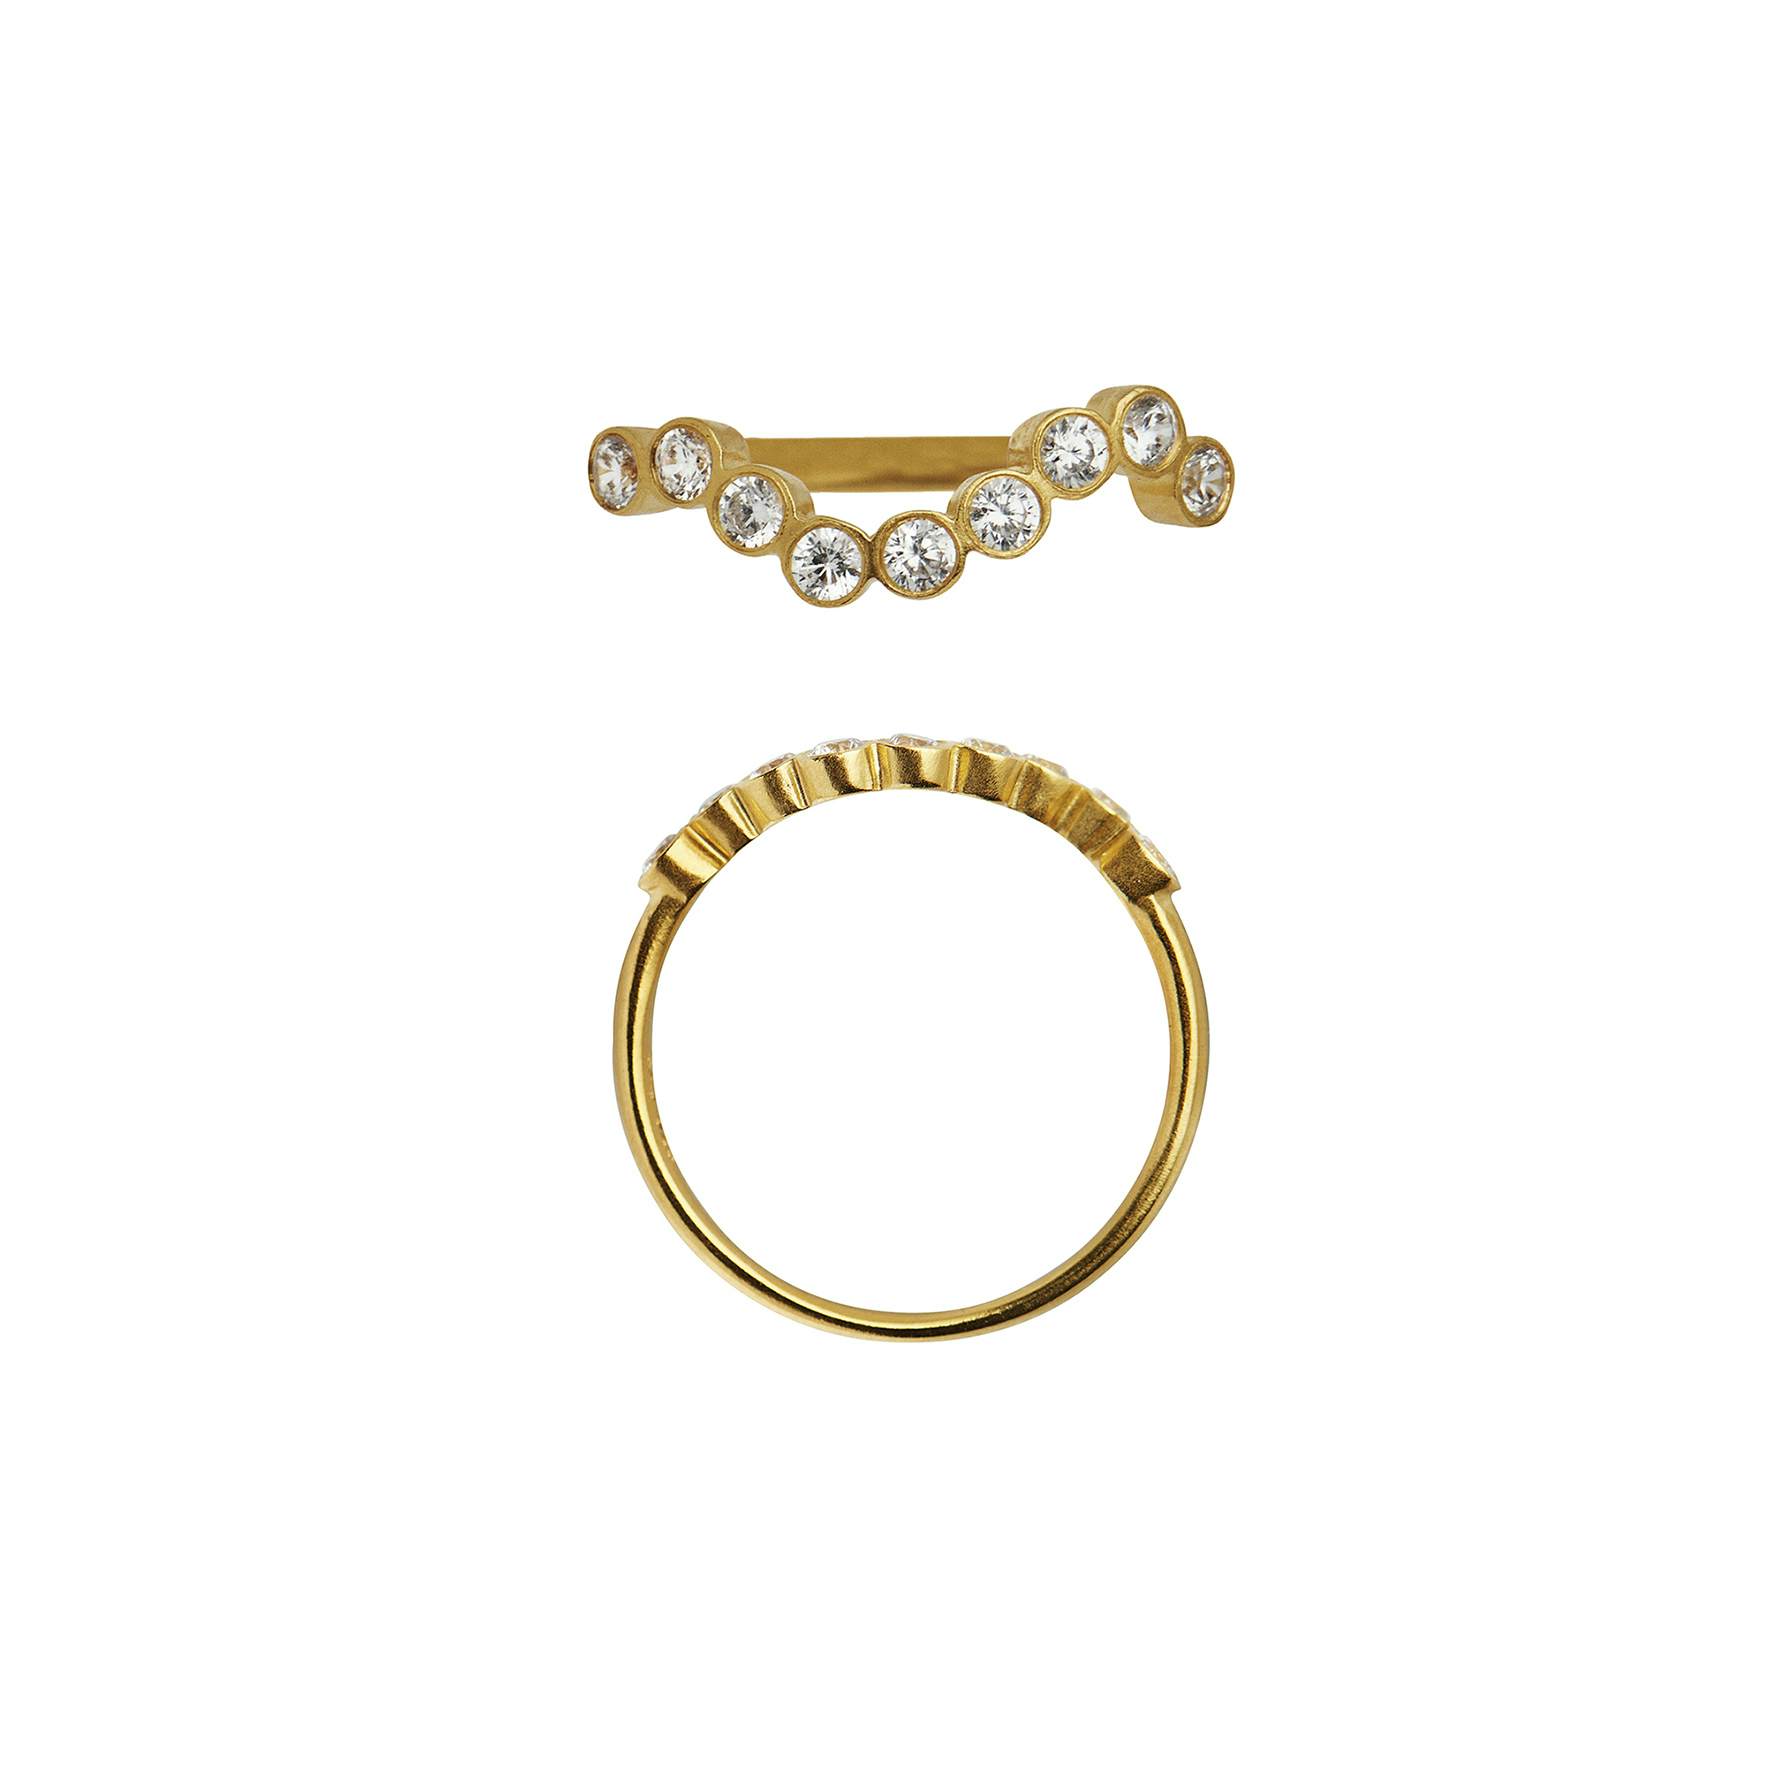 Midnight Sparkle Ring fra STINE A Jewelry i Forgylt-Sølv Sterling 925